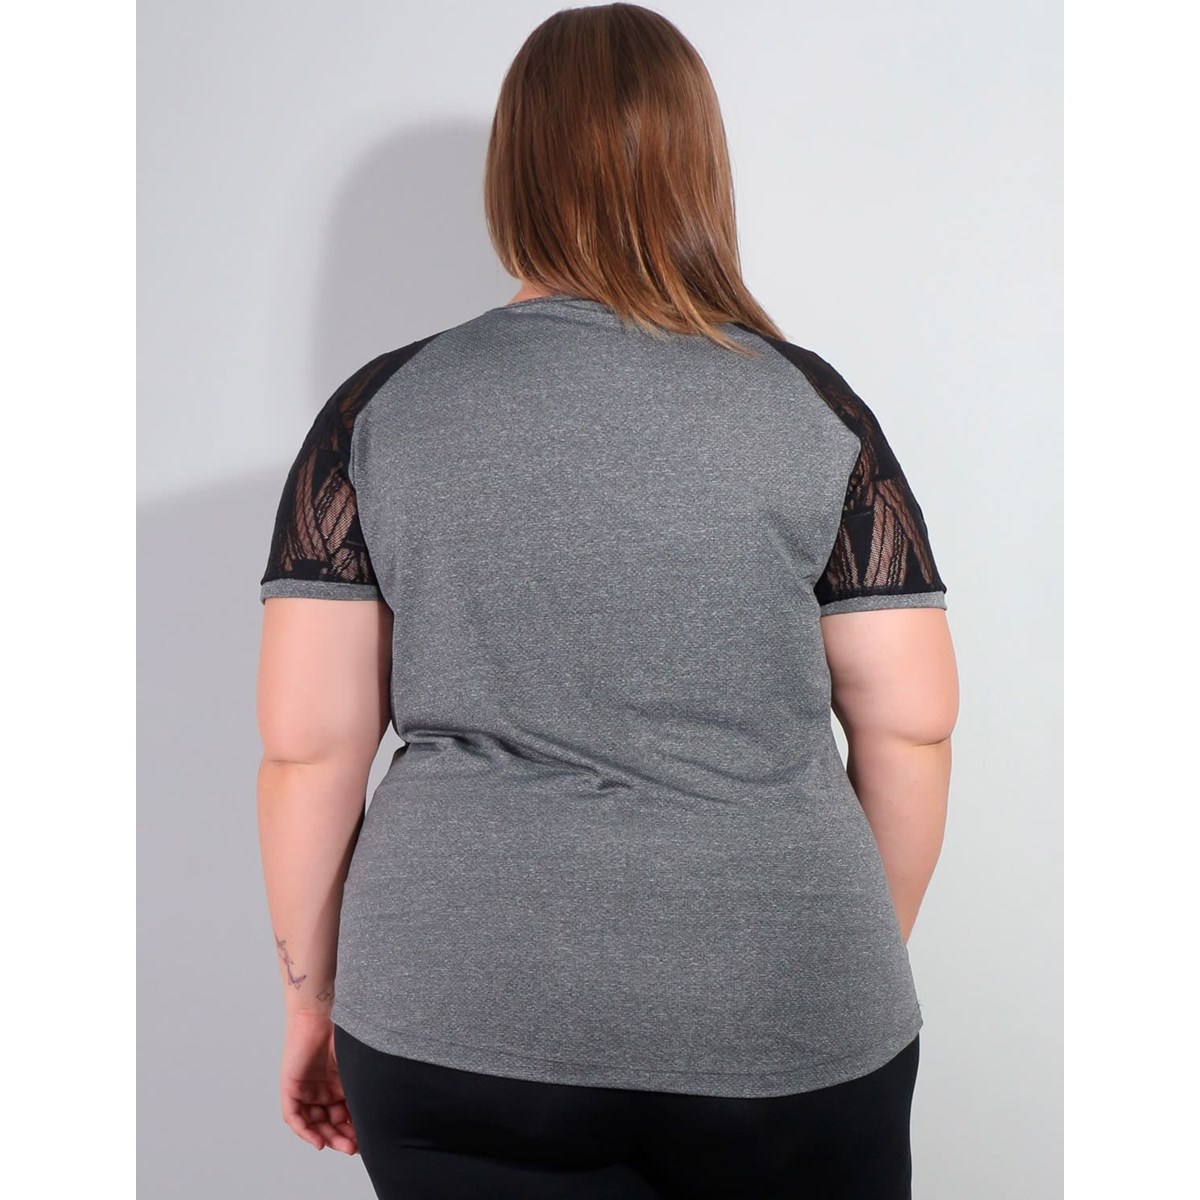 Camiseta Feminina Plus Size em Dry Fit Mescla com Recorte em Tela | Ref: 4.4.4142-03